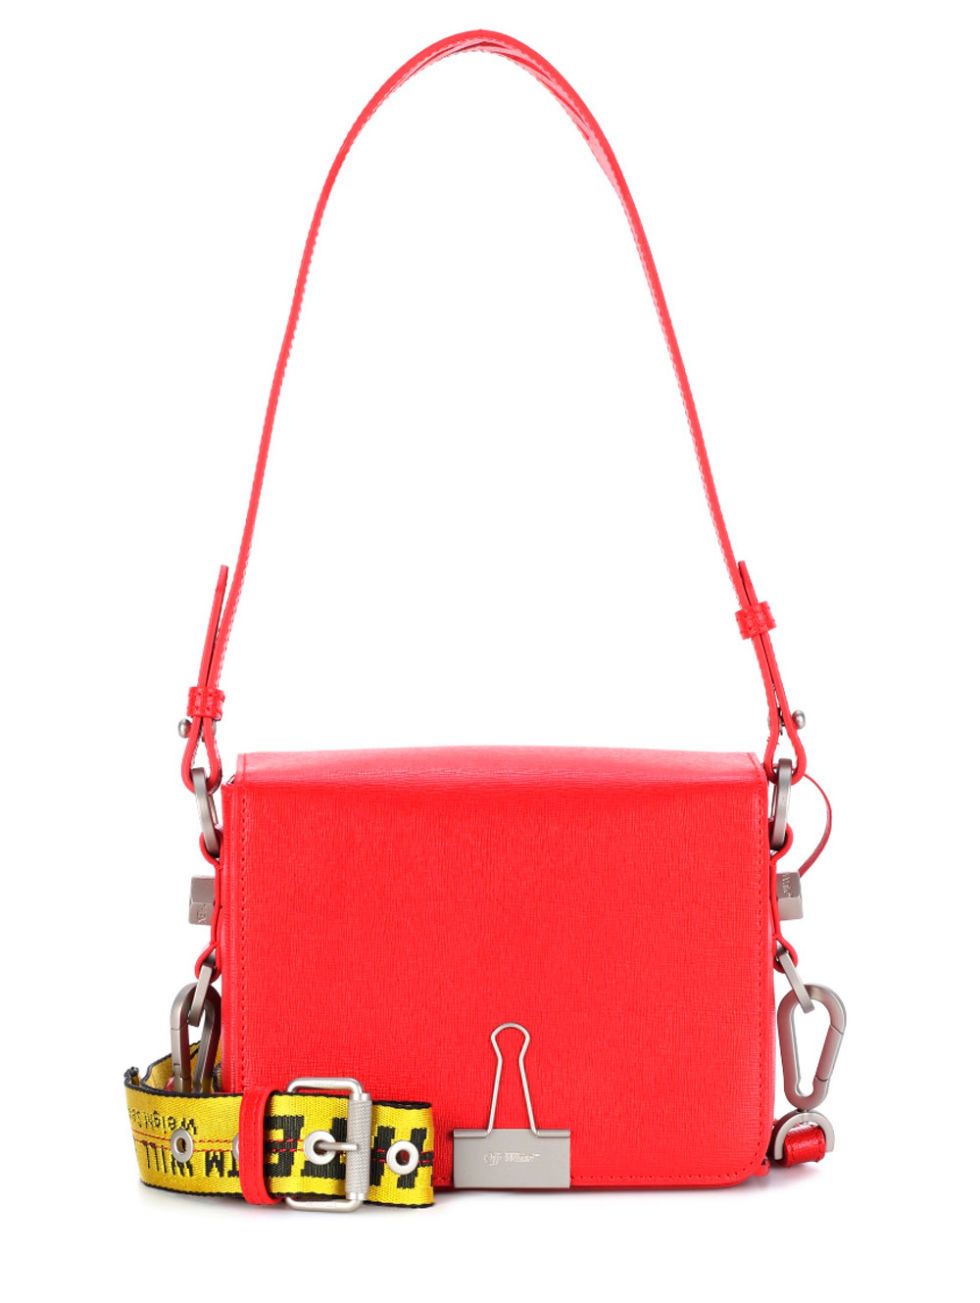 Handbag, Bag, Shoulder bag, Red, Fashion accessory, Material property, 